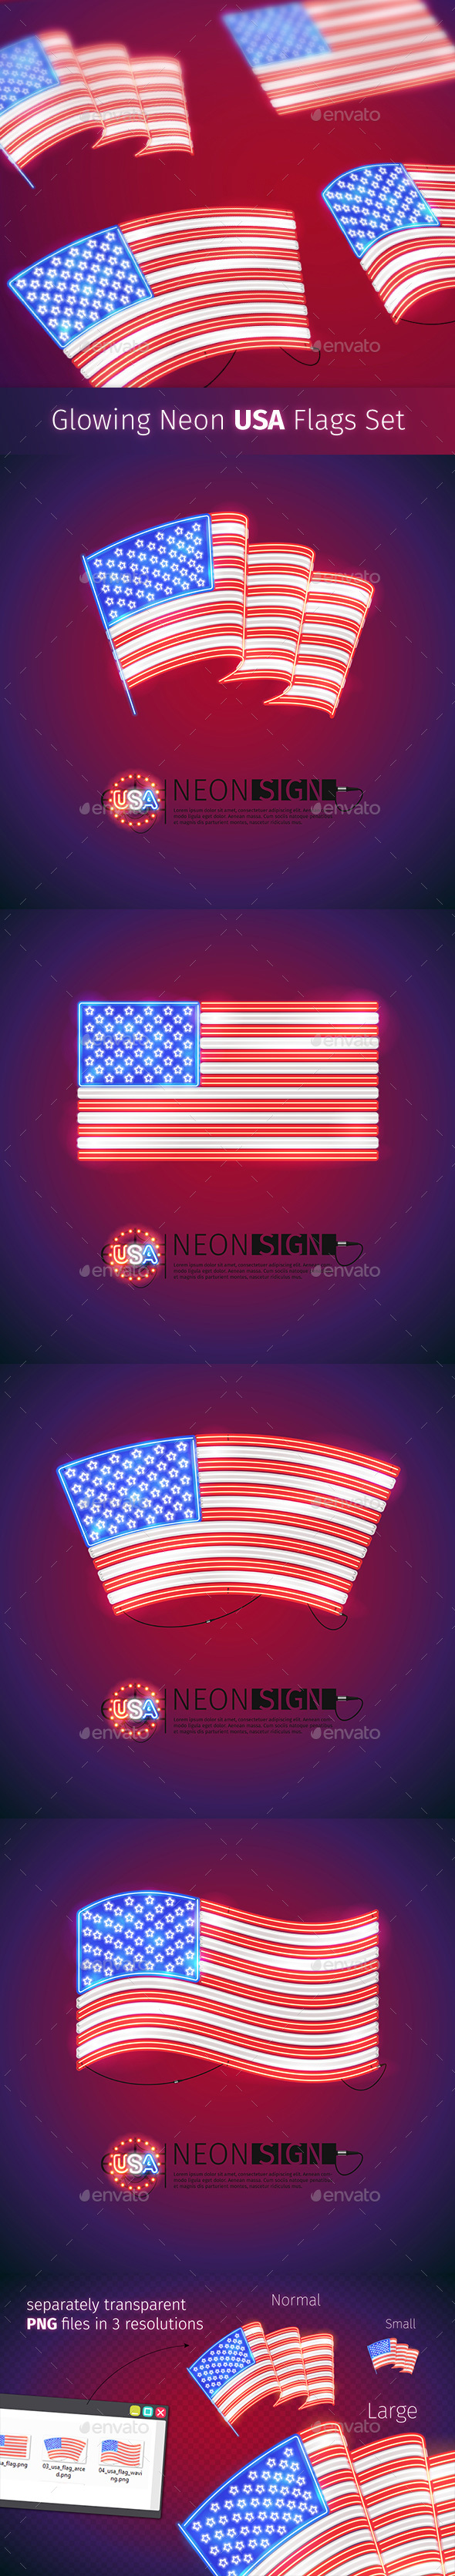 Glowing Neon USA Flags Set